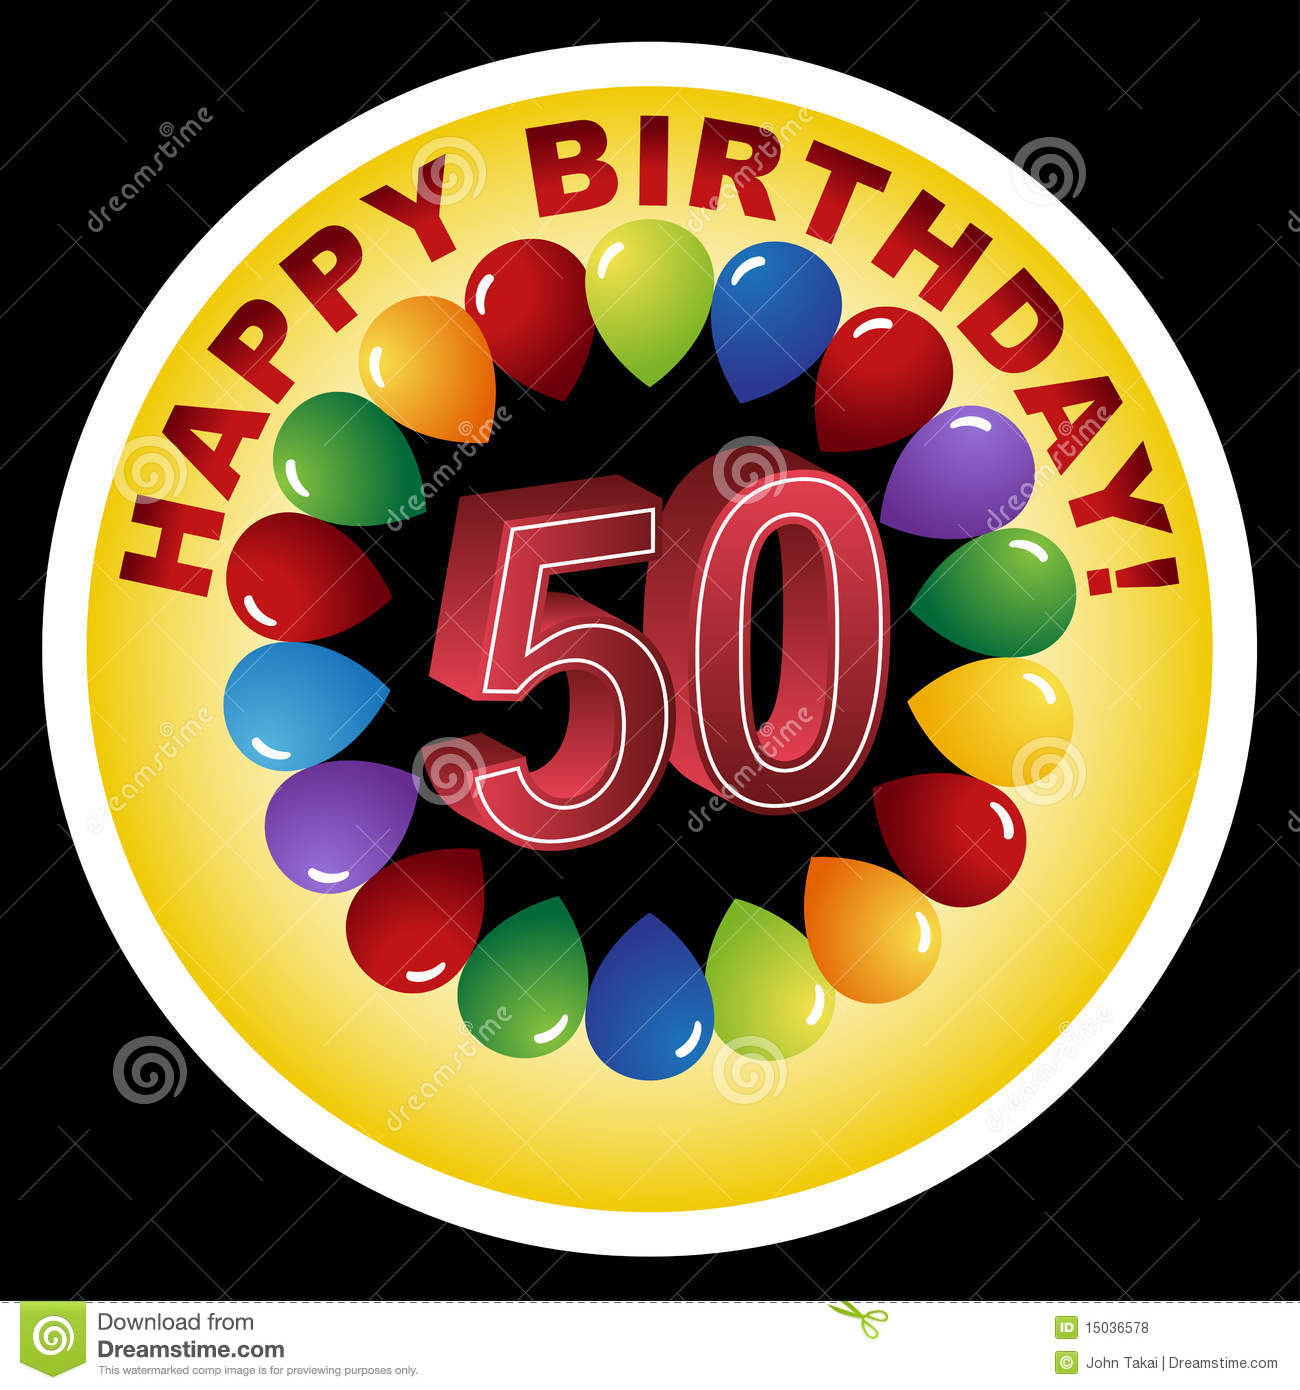 Happy 50th Birthday  Royalty Free Stock Photos   Image  15036578